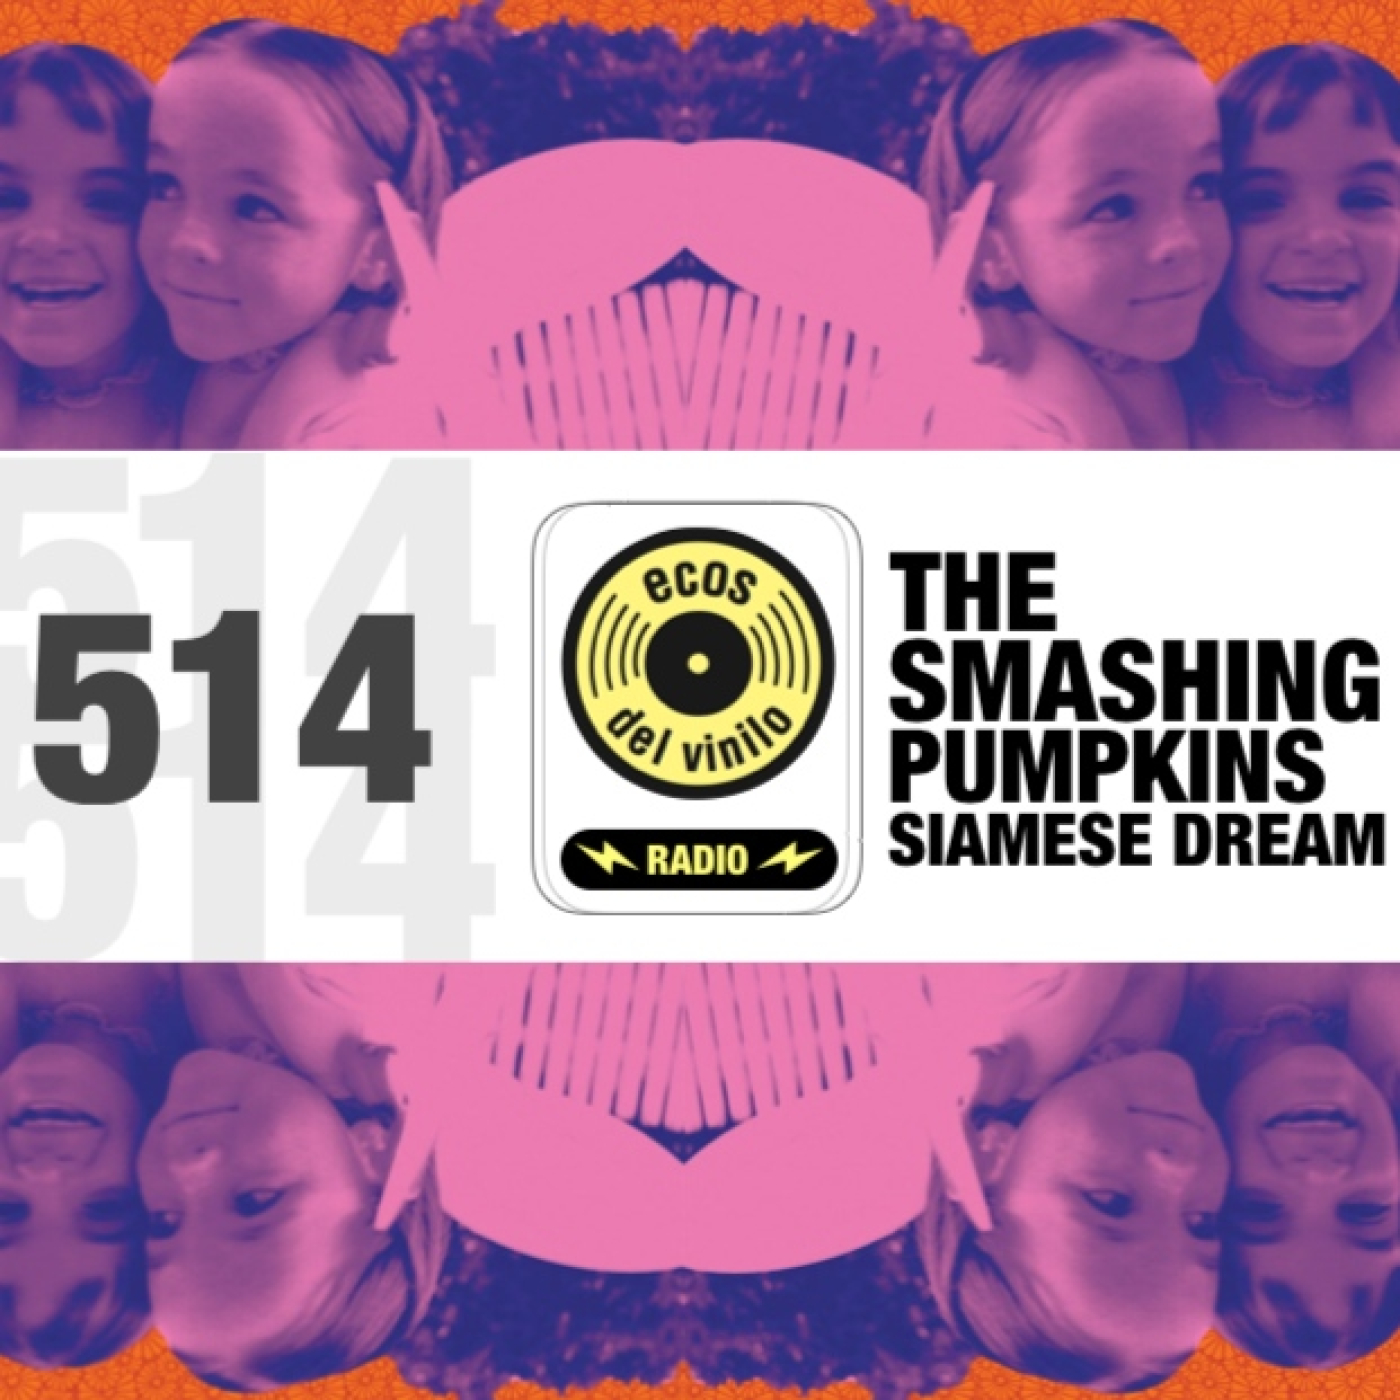 The Smashing Pumpkins / Siamese Dream | Programa 514 – Ecos del Vinilo Radio